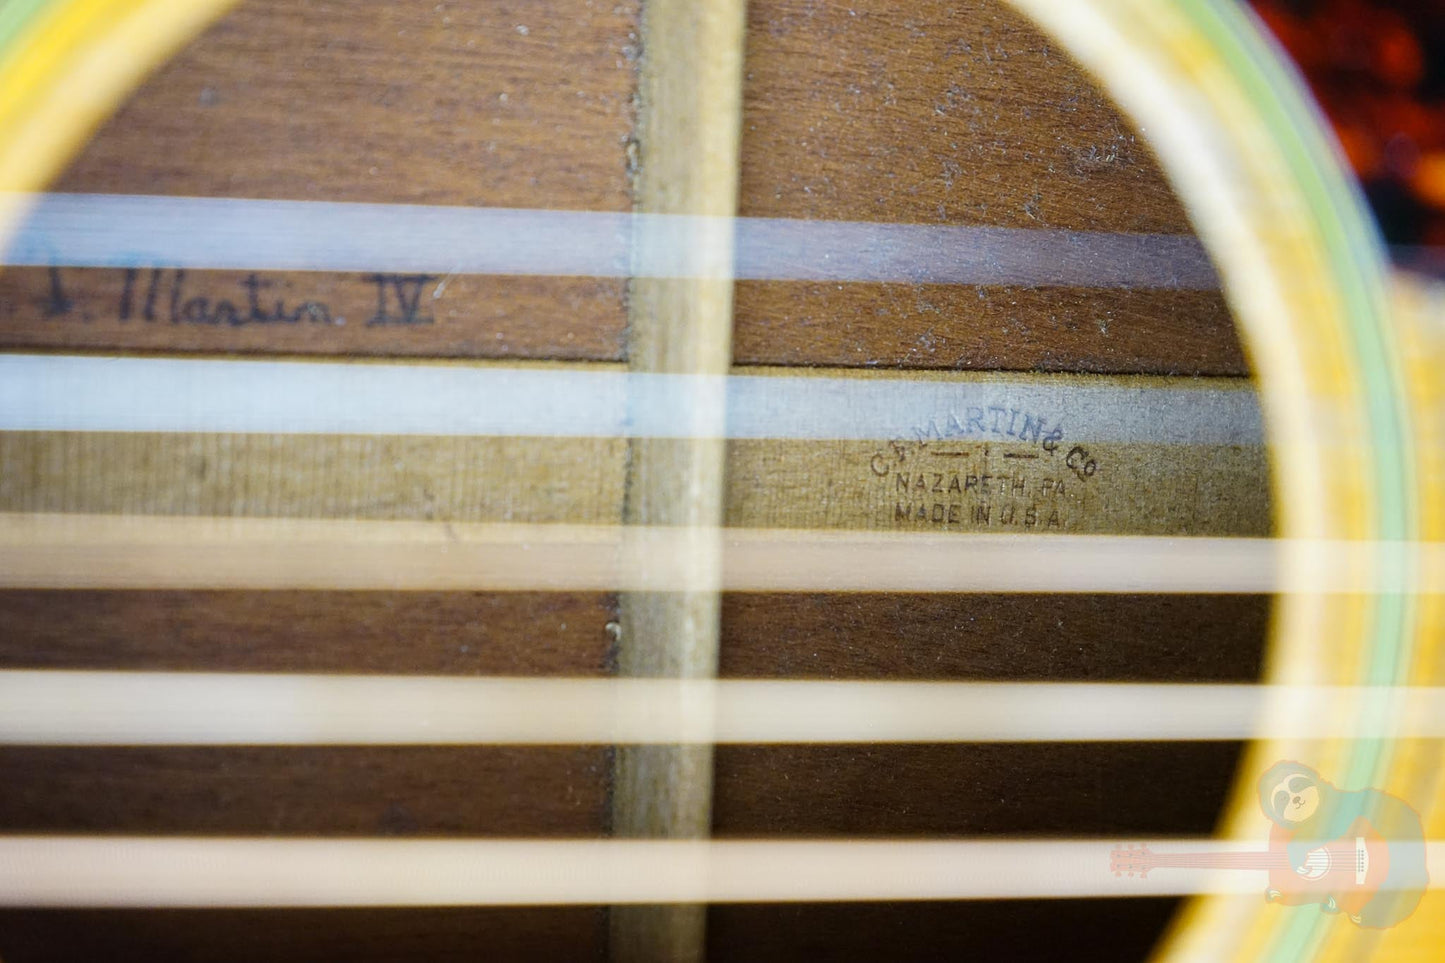 Martin D-18 Acoustic Guitar Natural Vintage 1963